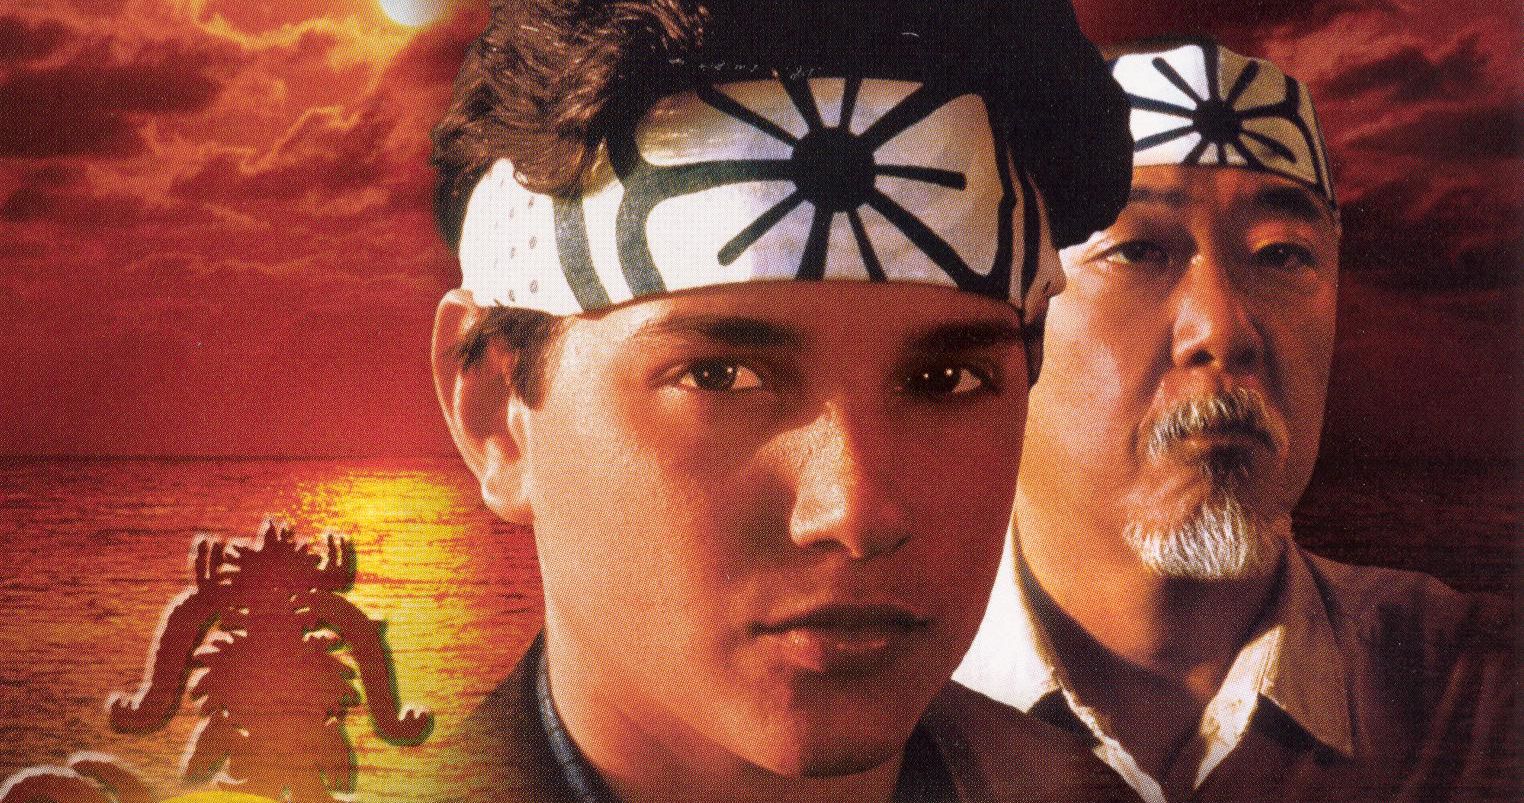 Original Karate Kid Title Was Pretty Bad Reveals Cobra Kai Star Ralph Macchio